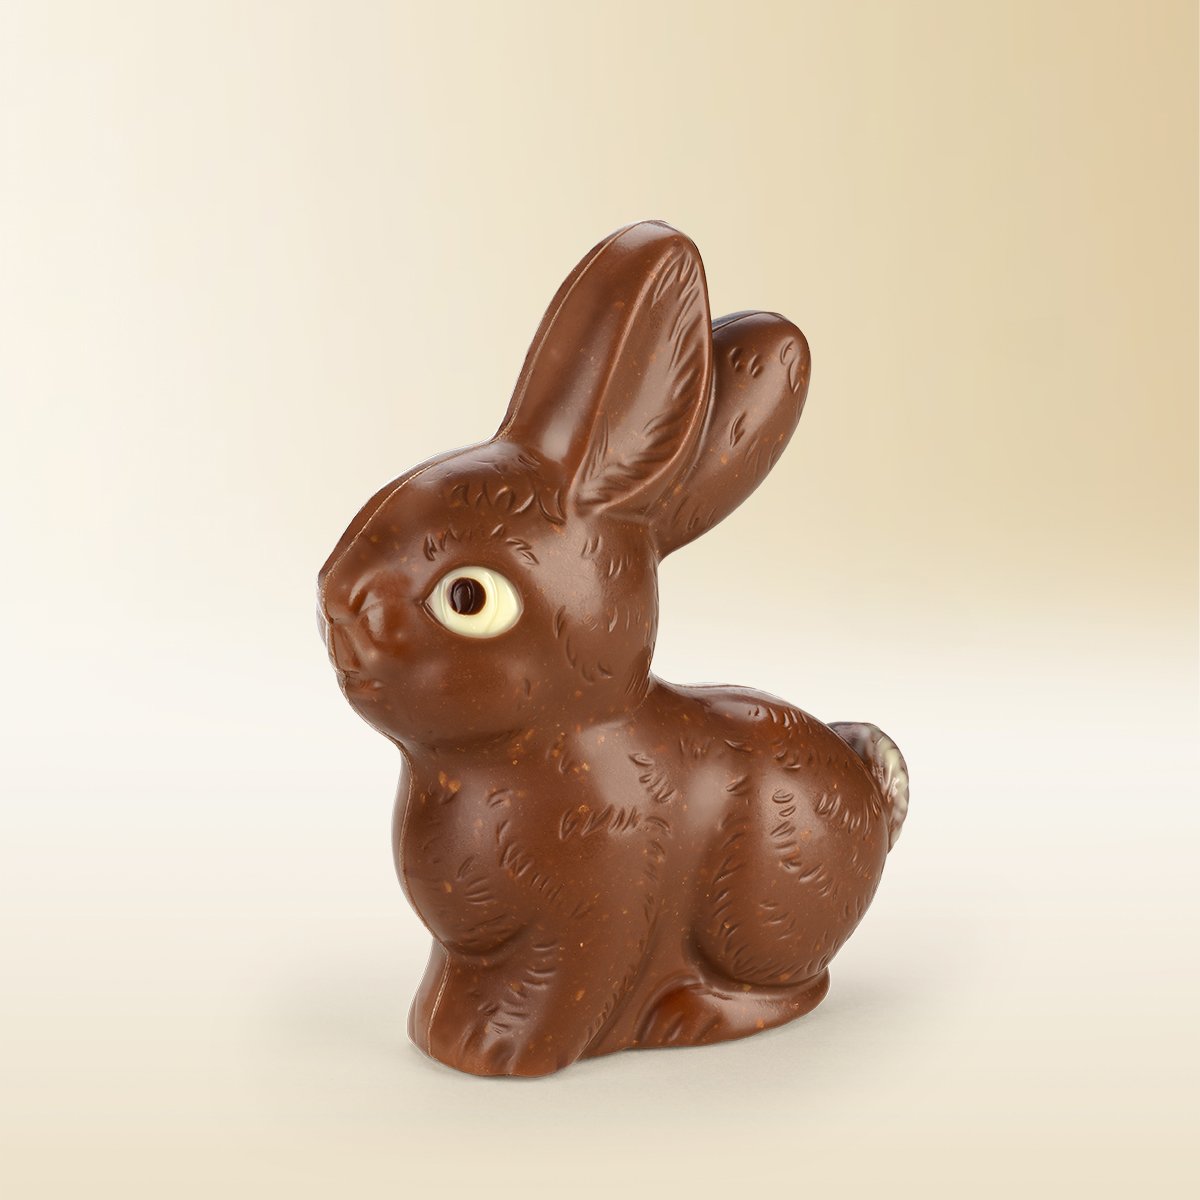 Chocolat bunny Caramelo 100g